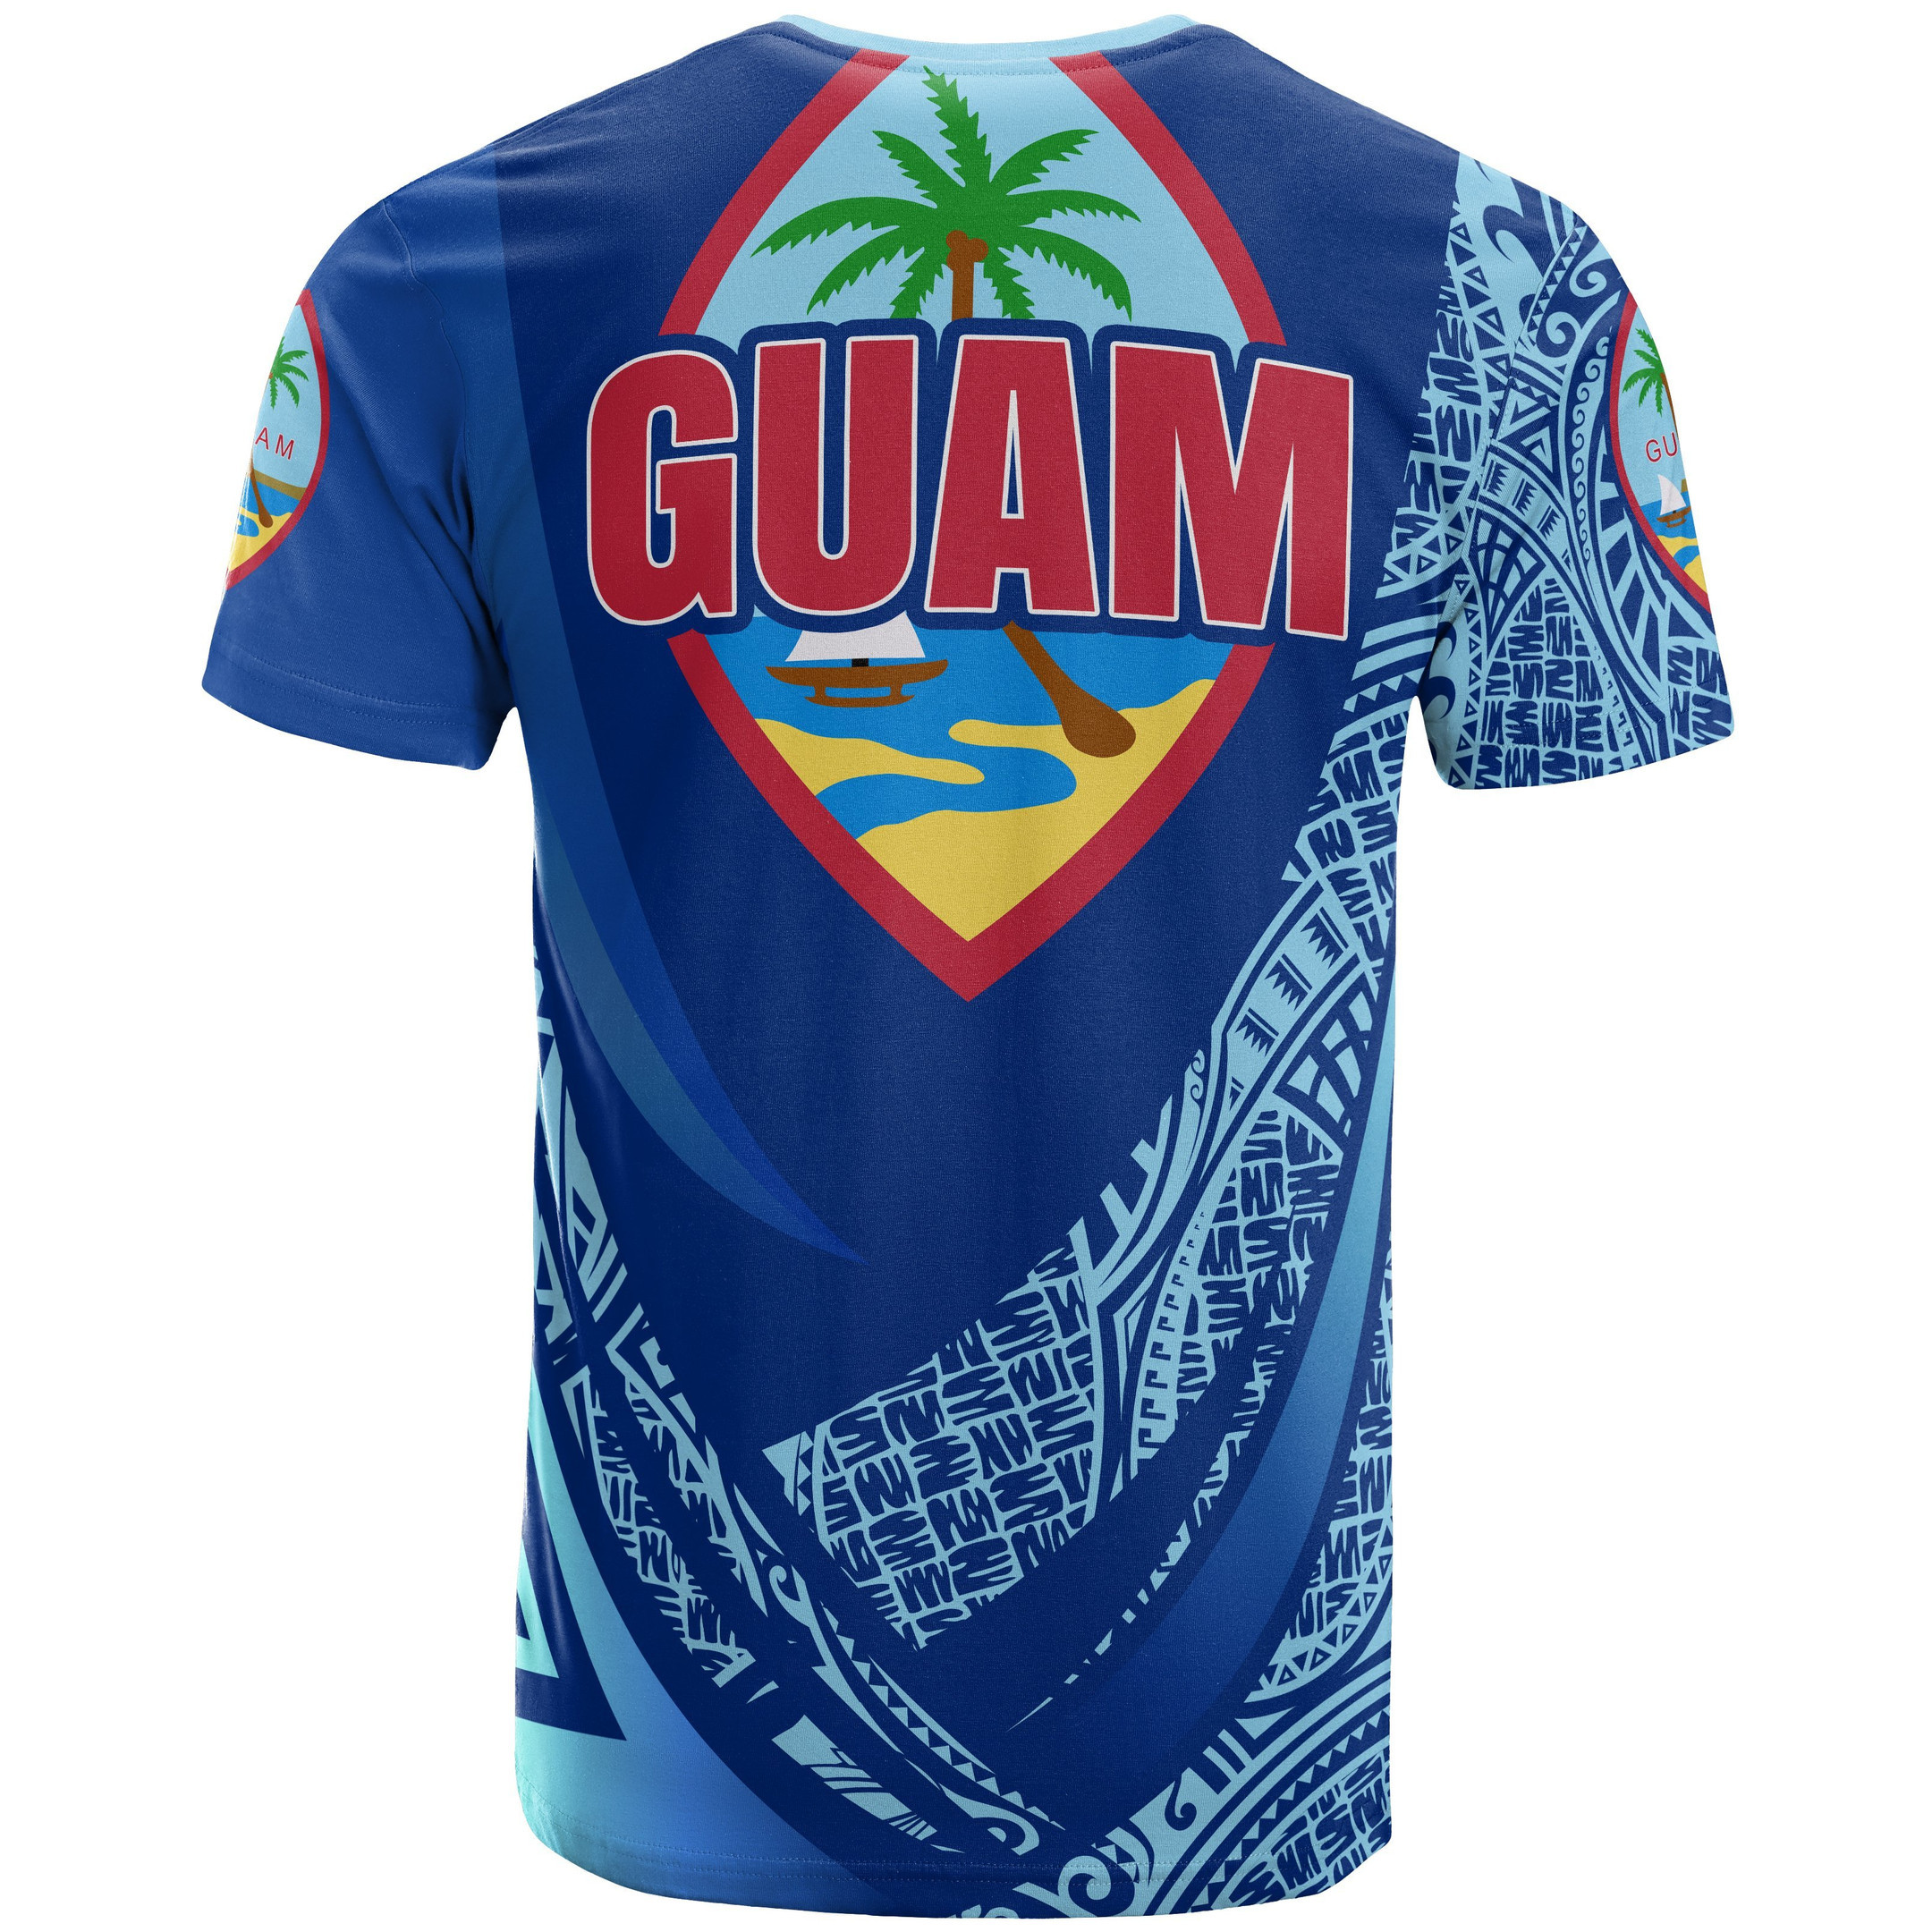 Guam T-Shirt - Polynesian Patterns Sport Style - BN01